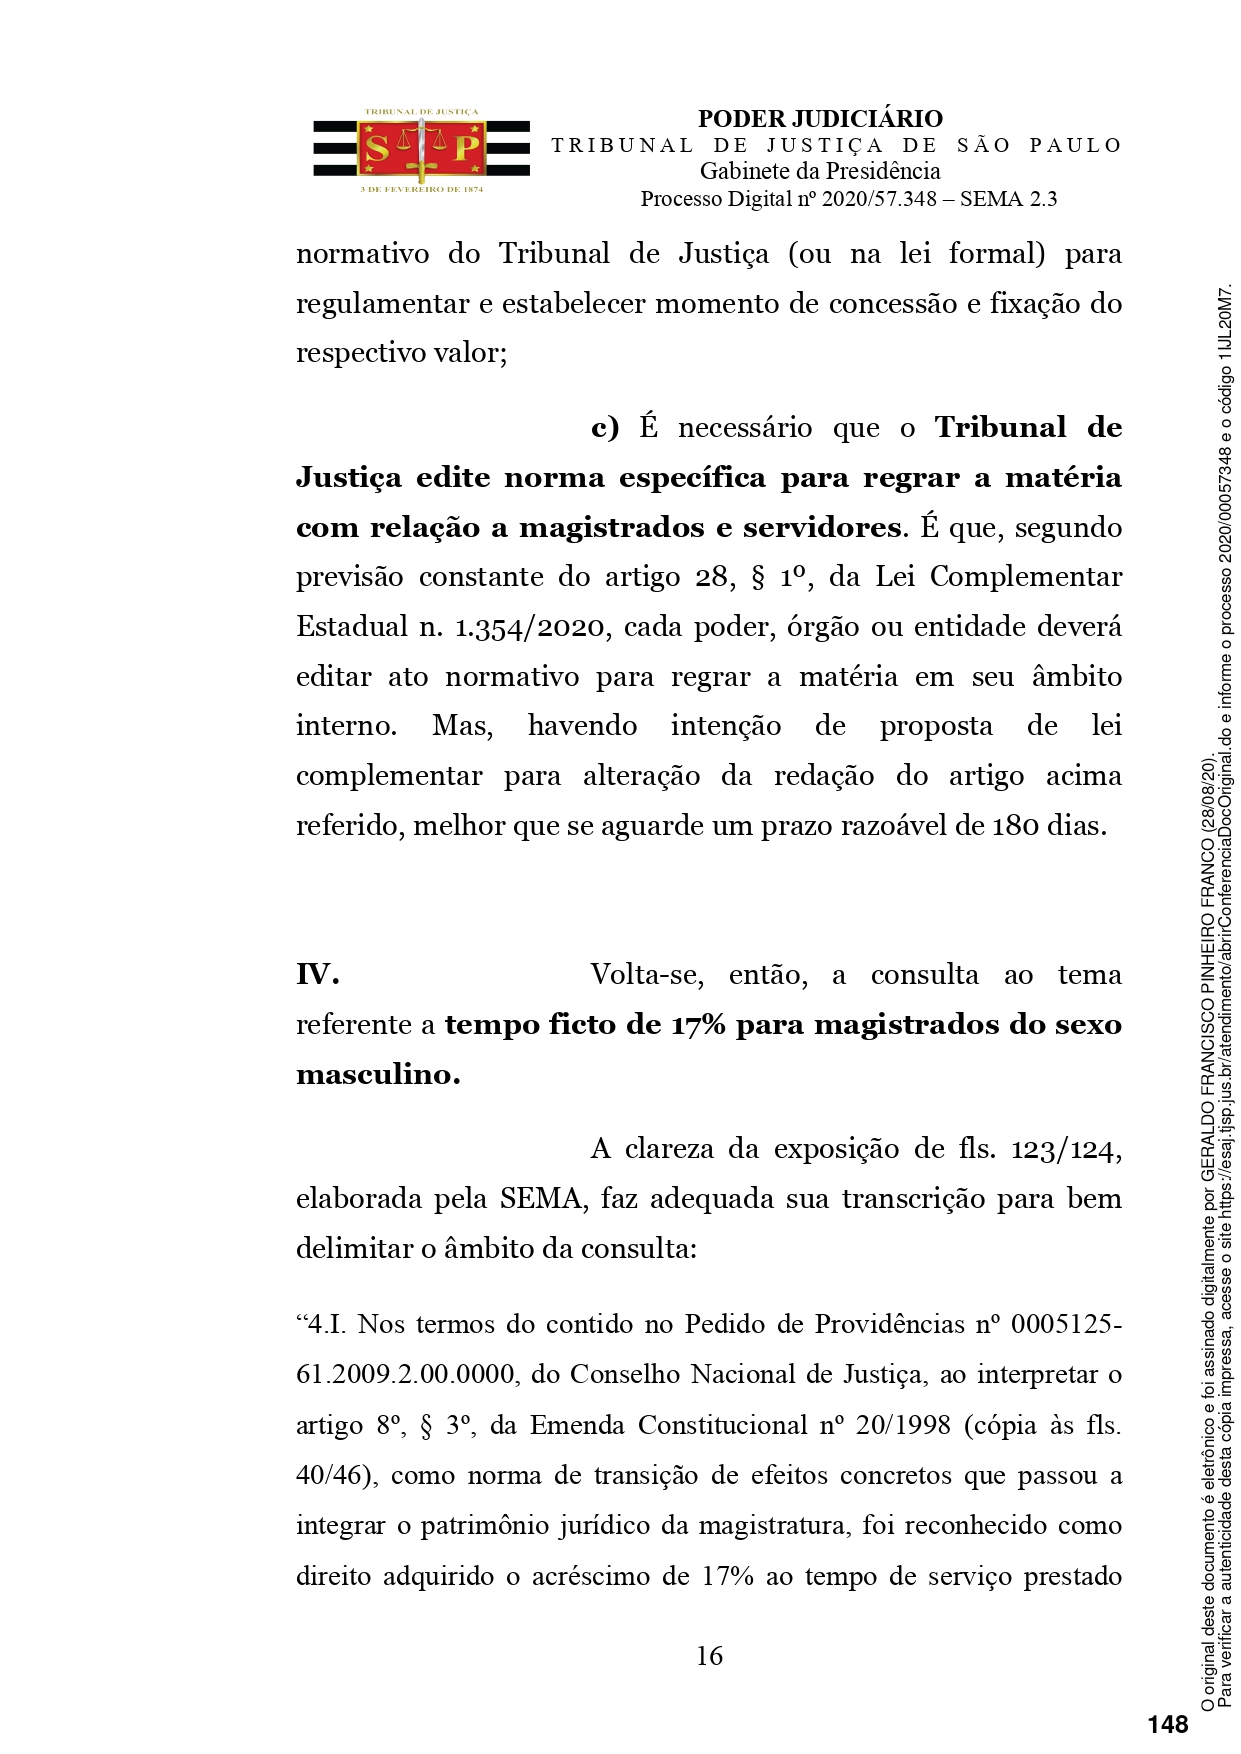 reforma-previdencia-tj-sp_page-0016.jpg